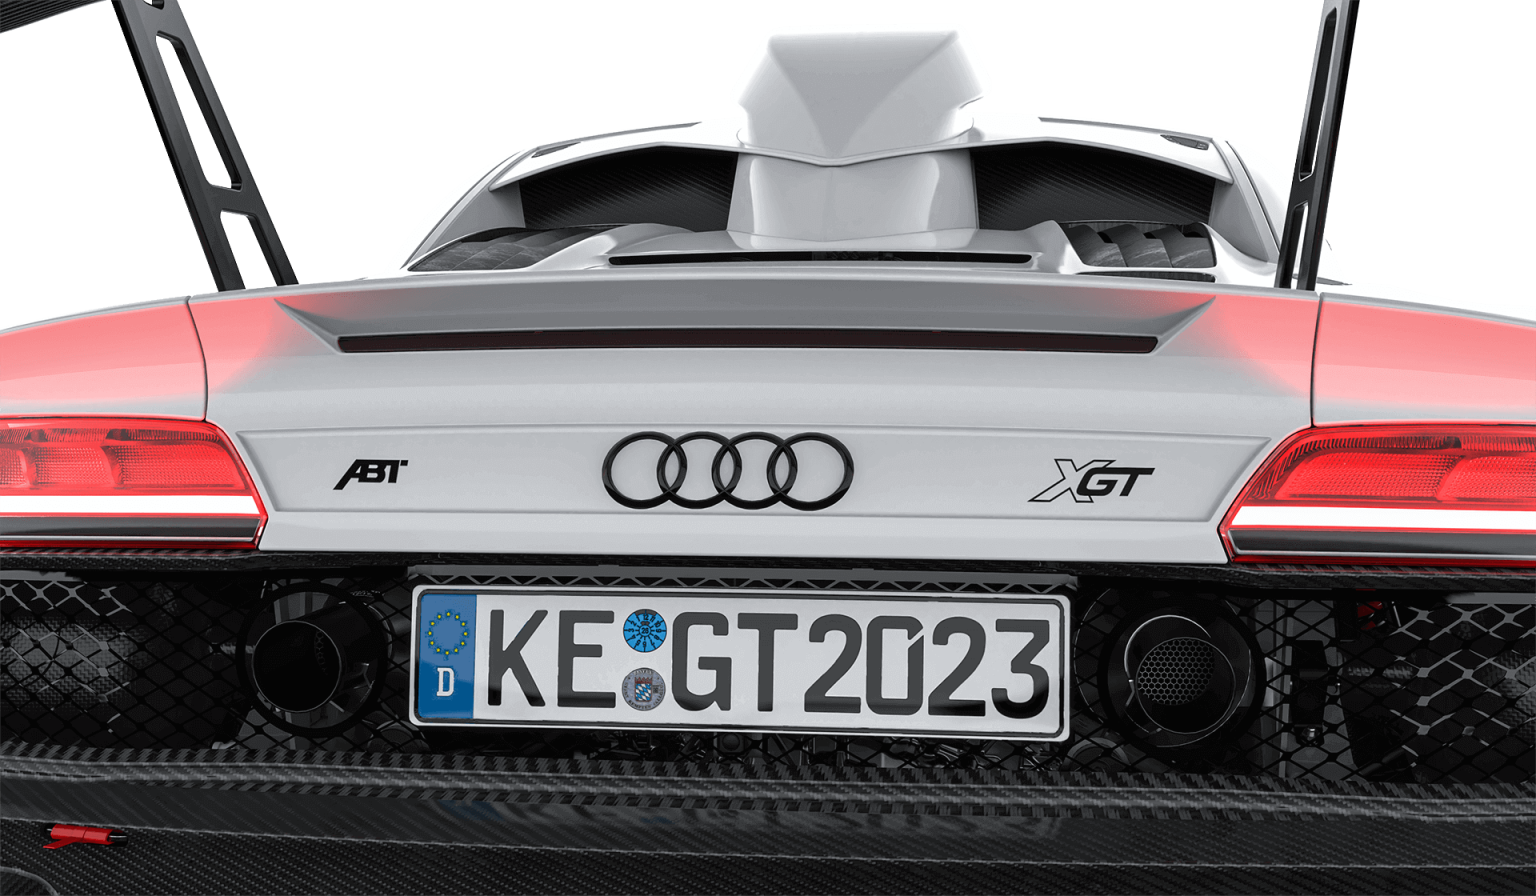 2023-ABT-XGT-Audi-R8-LMS-11-1536x896.png